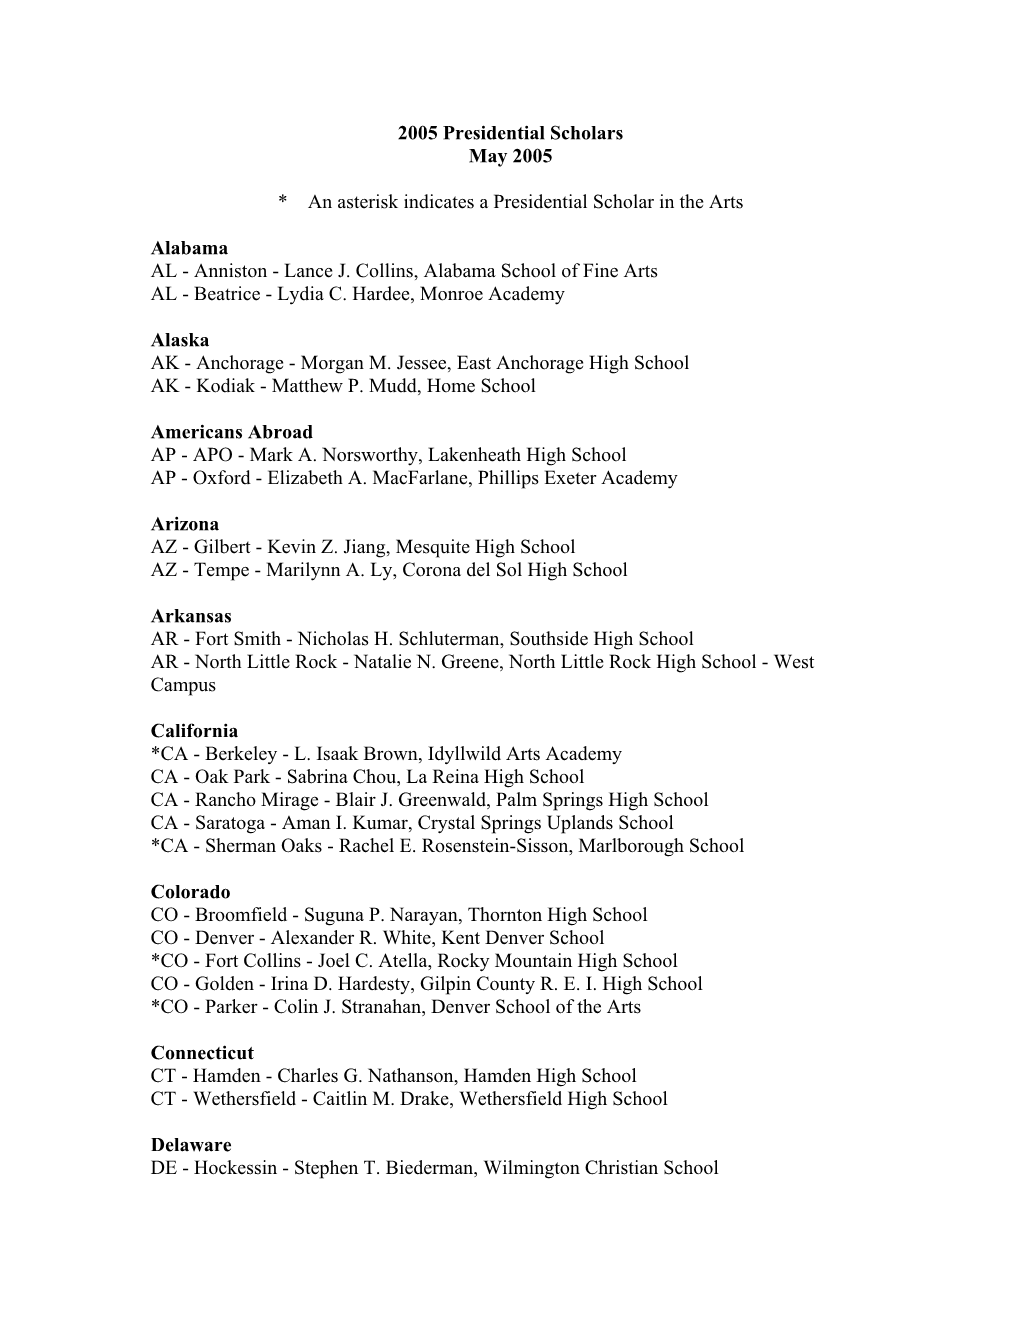 2005 Presidential Scholars (PDF)